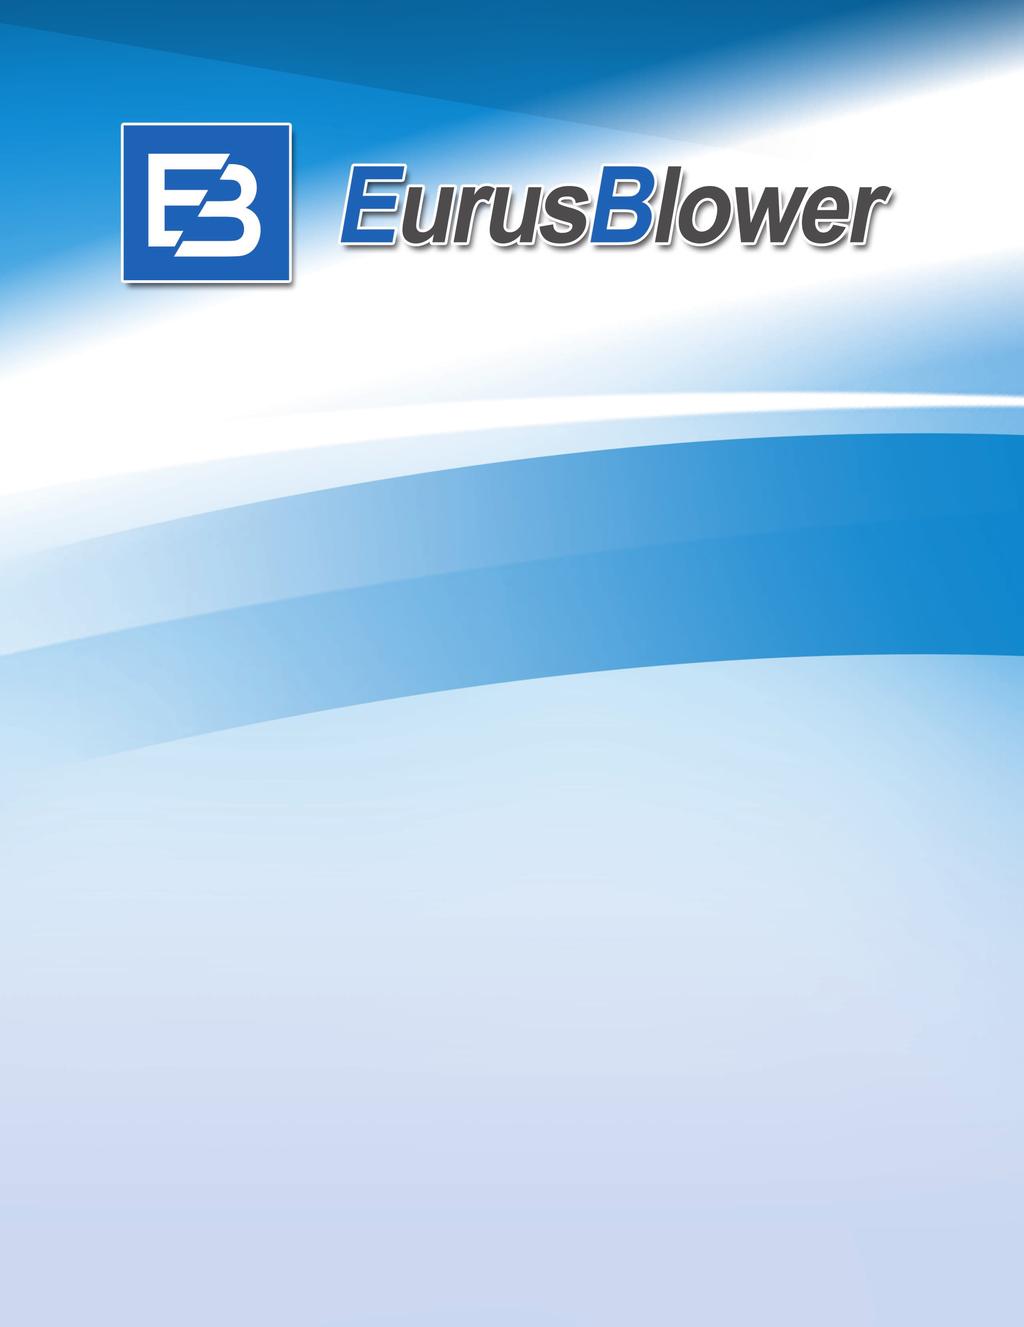 ZZ Series Bi-lobe Positive Displacement s Eurus :Built For a Long Life Drop-in